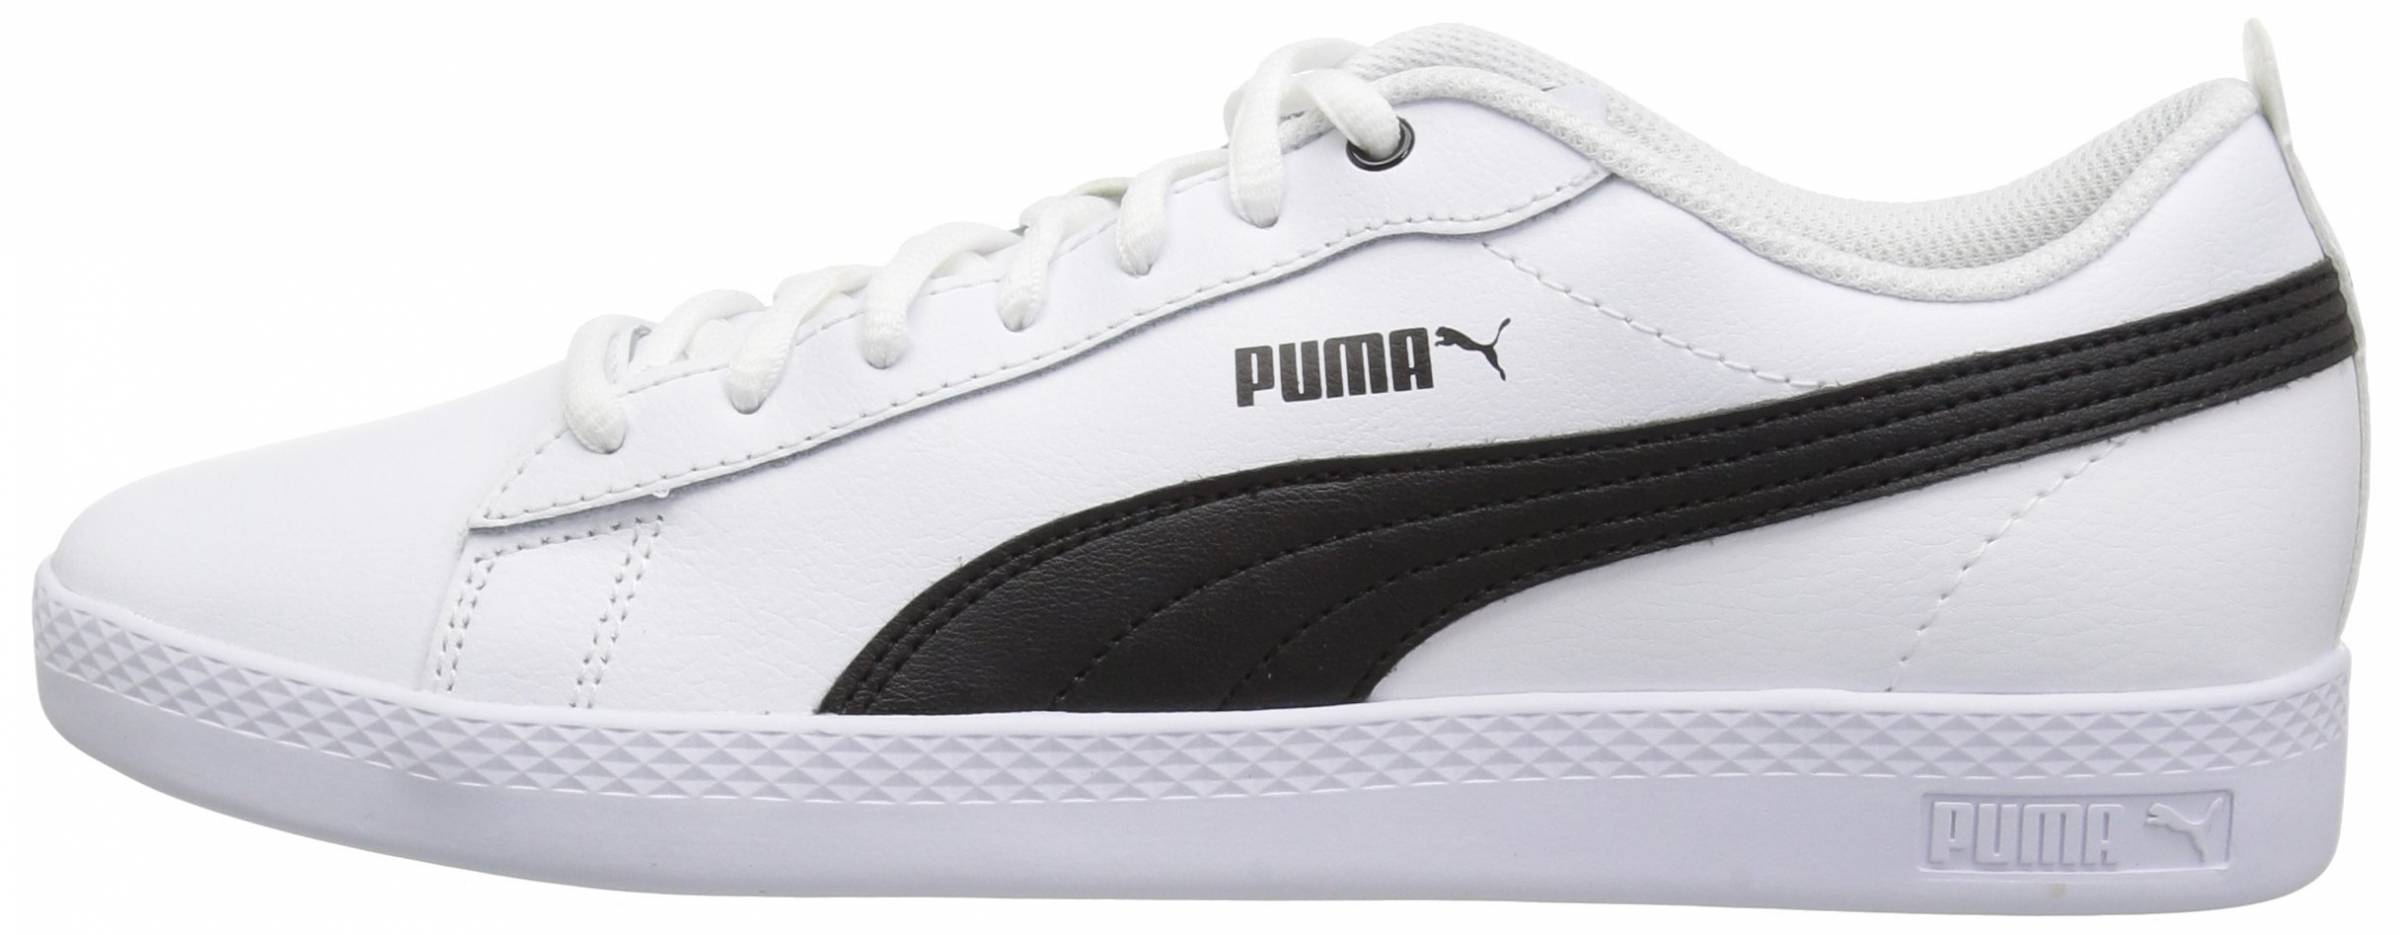 puma shoes black leather